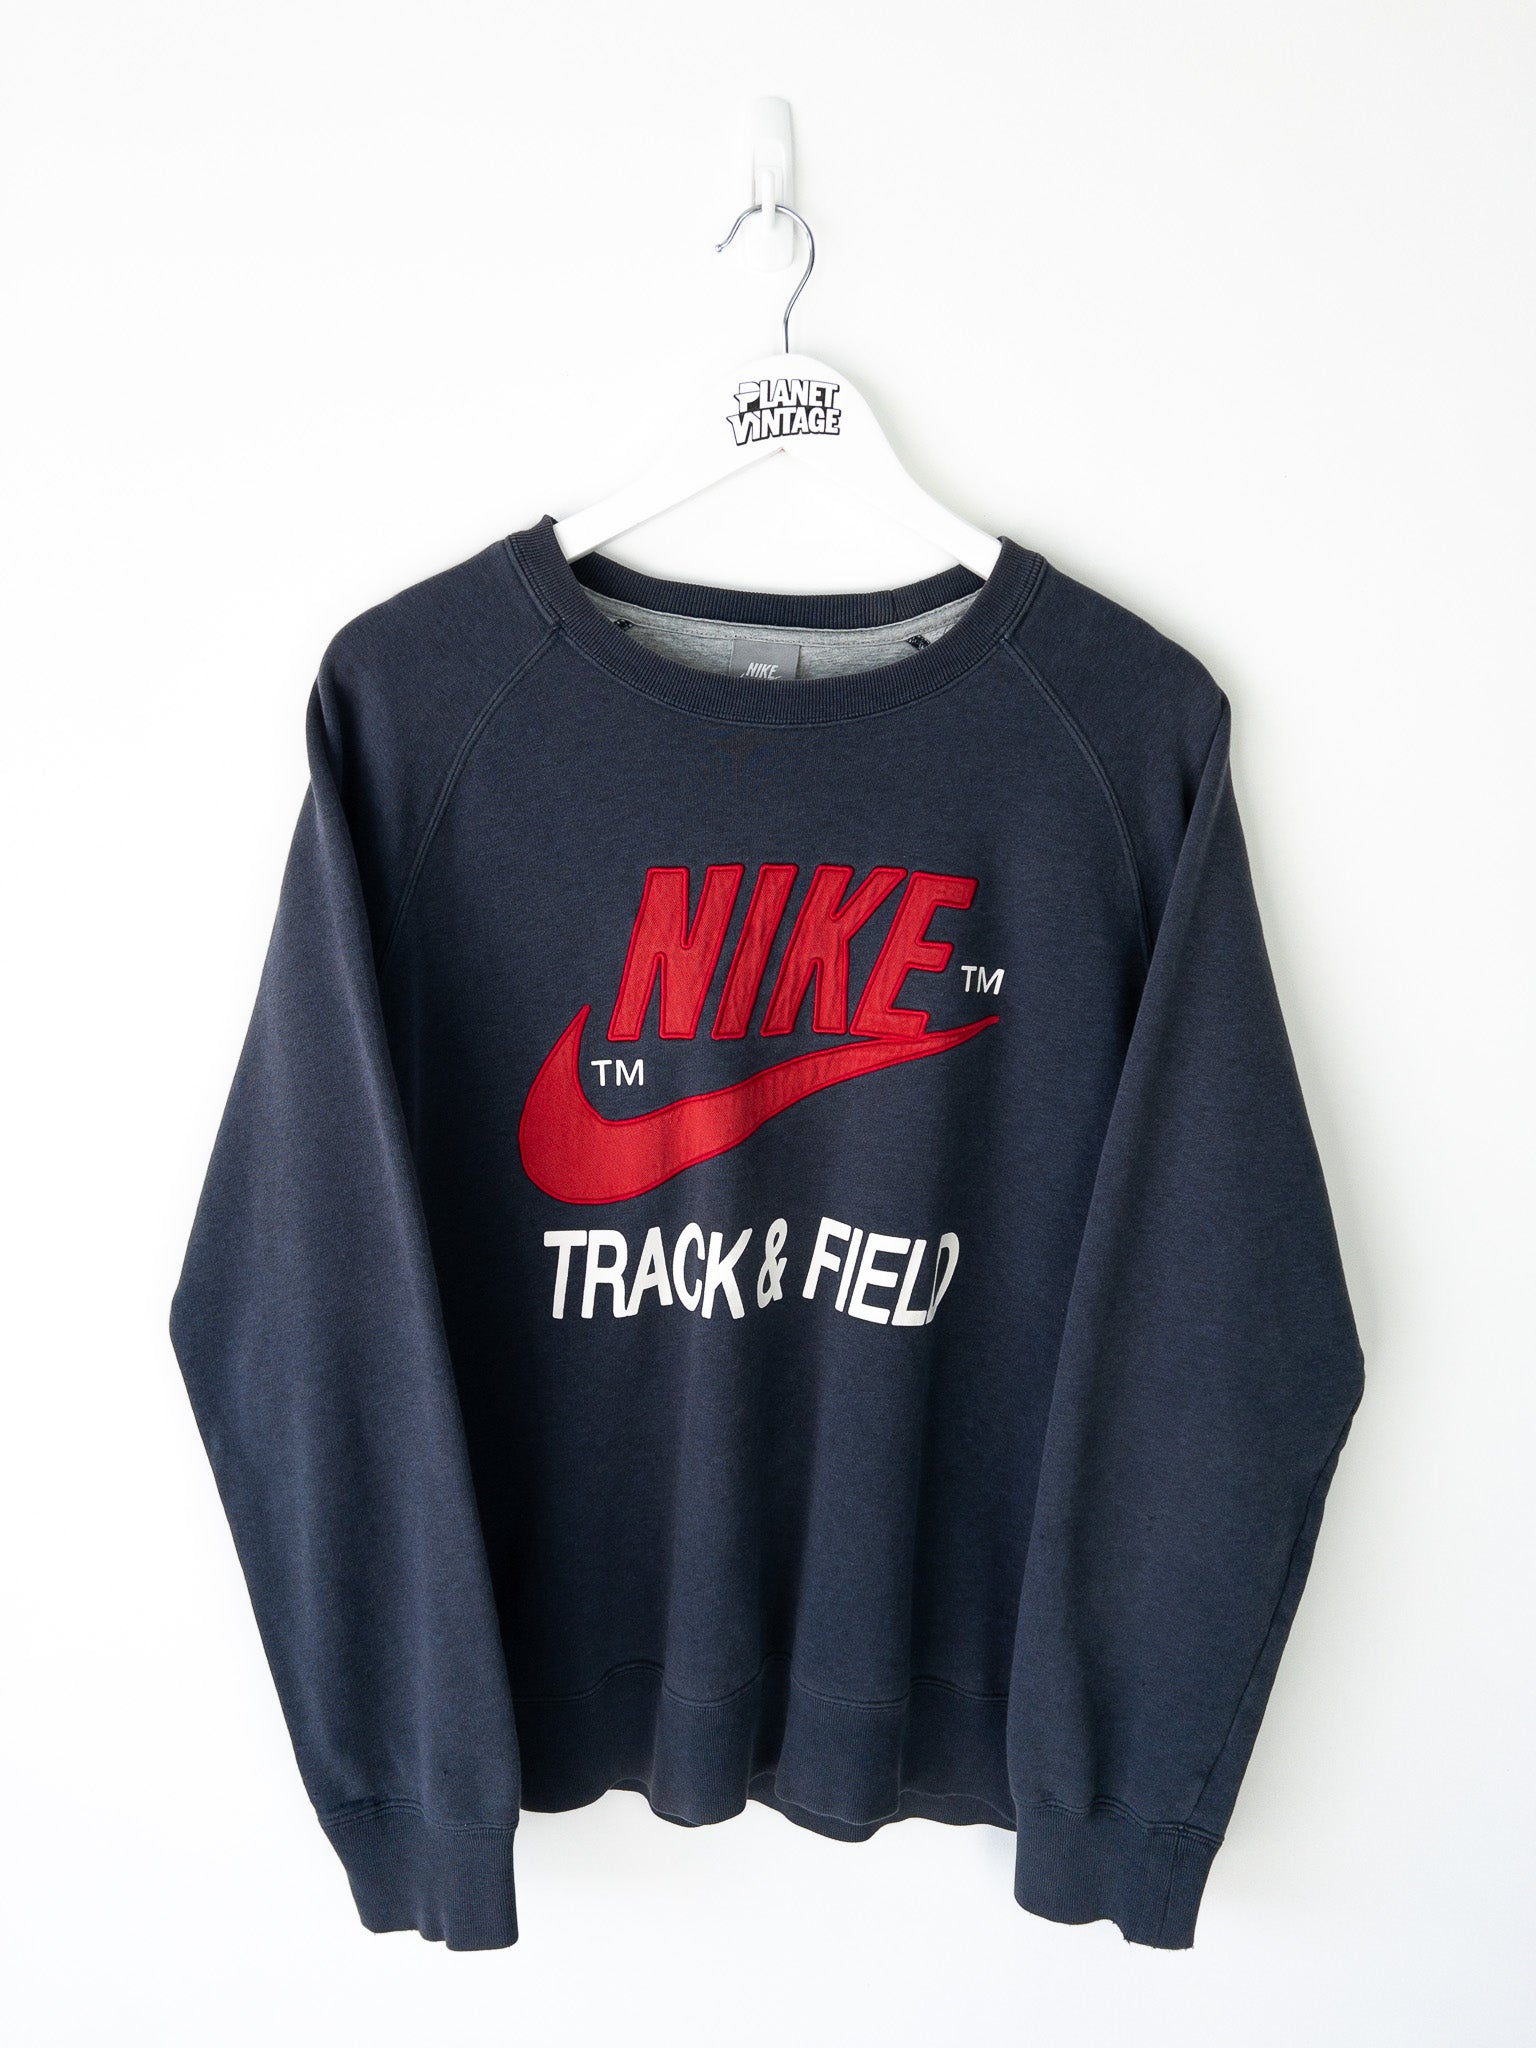 Vintage Nike Track & Field Sweatshirt (L)